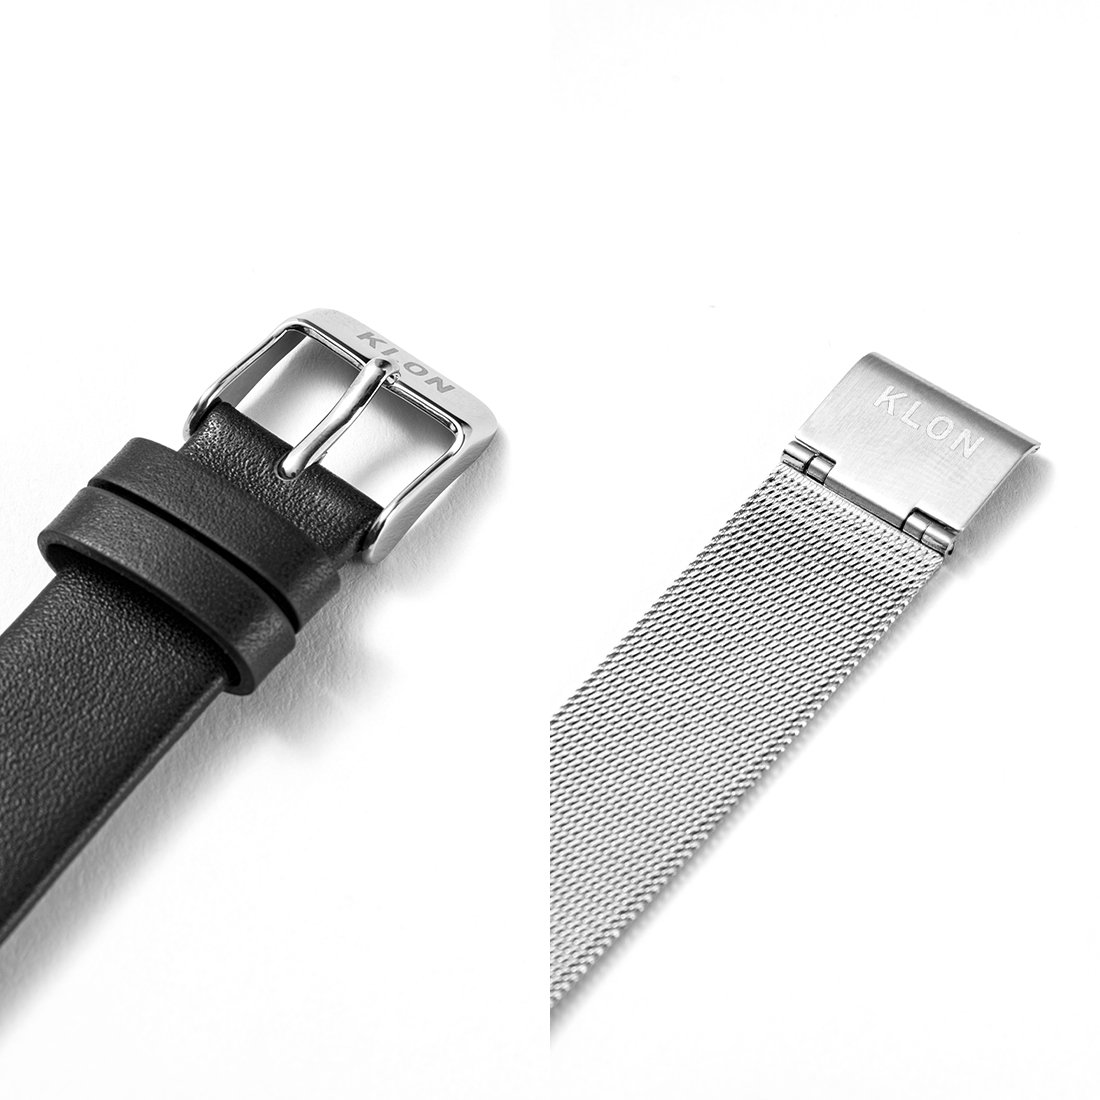 KLON MOCK NUMBER -REPLACE model- [38/W-FACE] カジュアル 腕時計